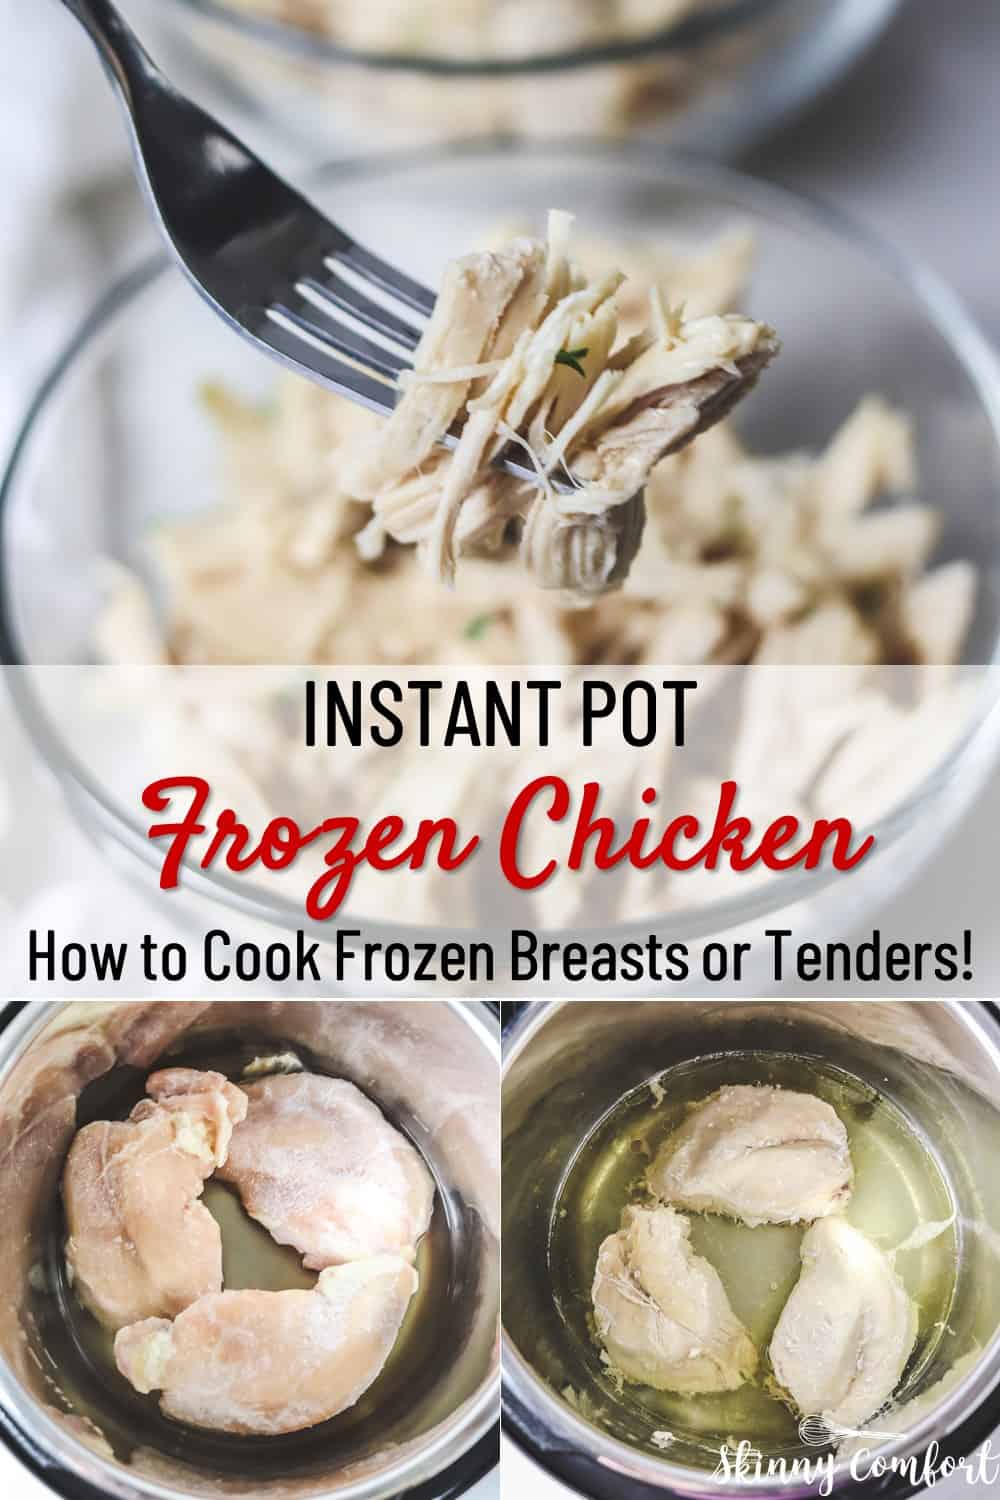 Instant Pot frozen chicken